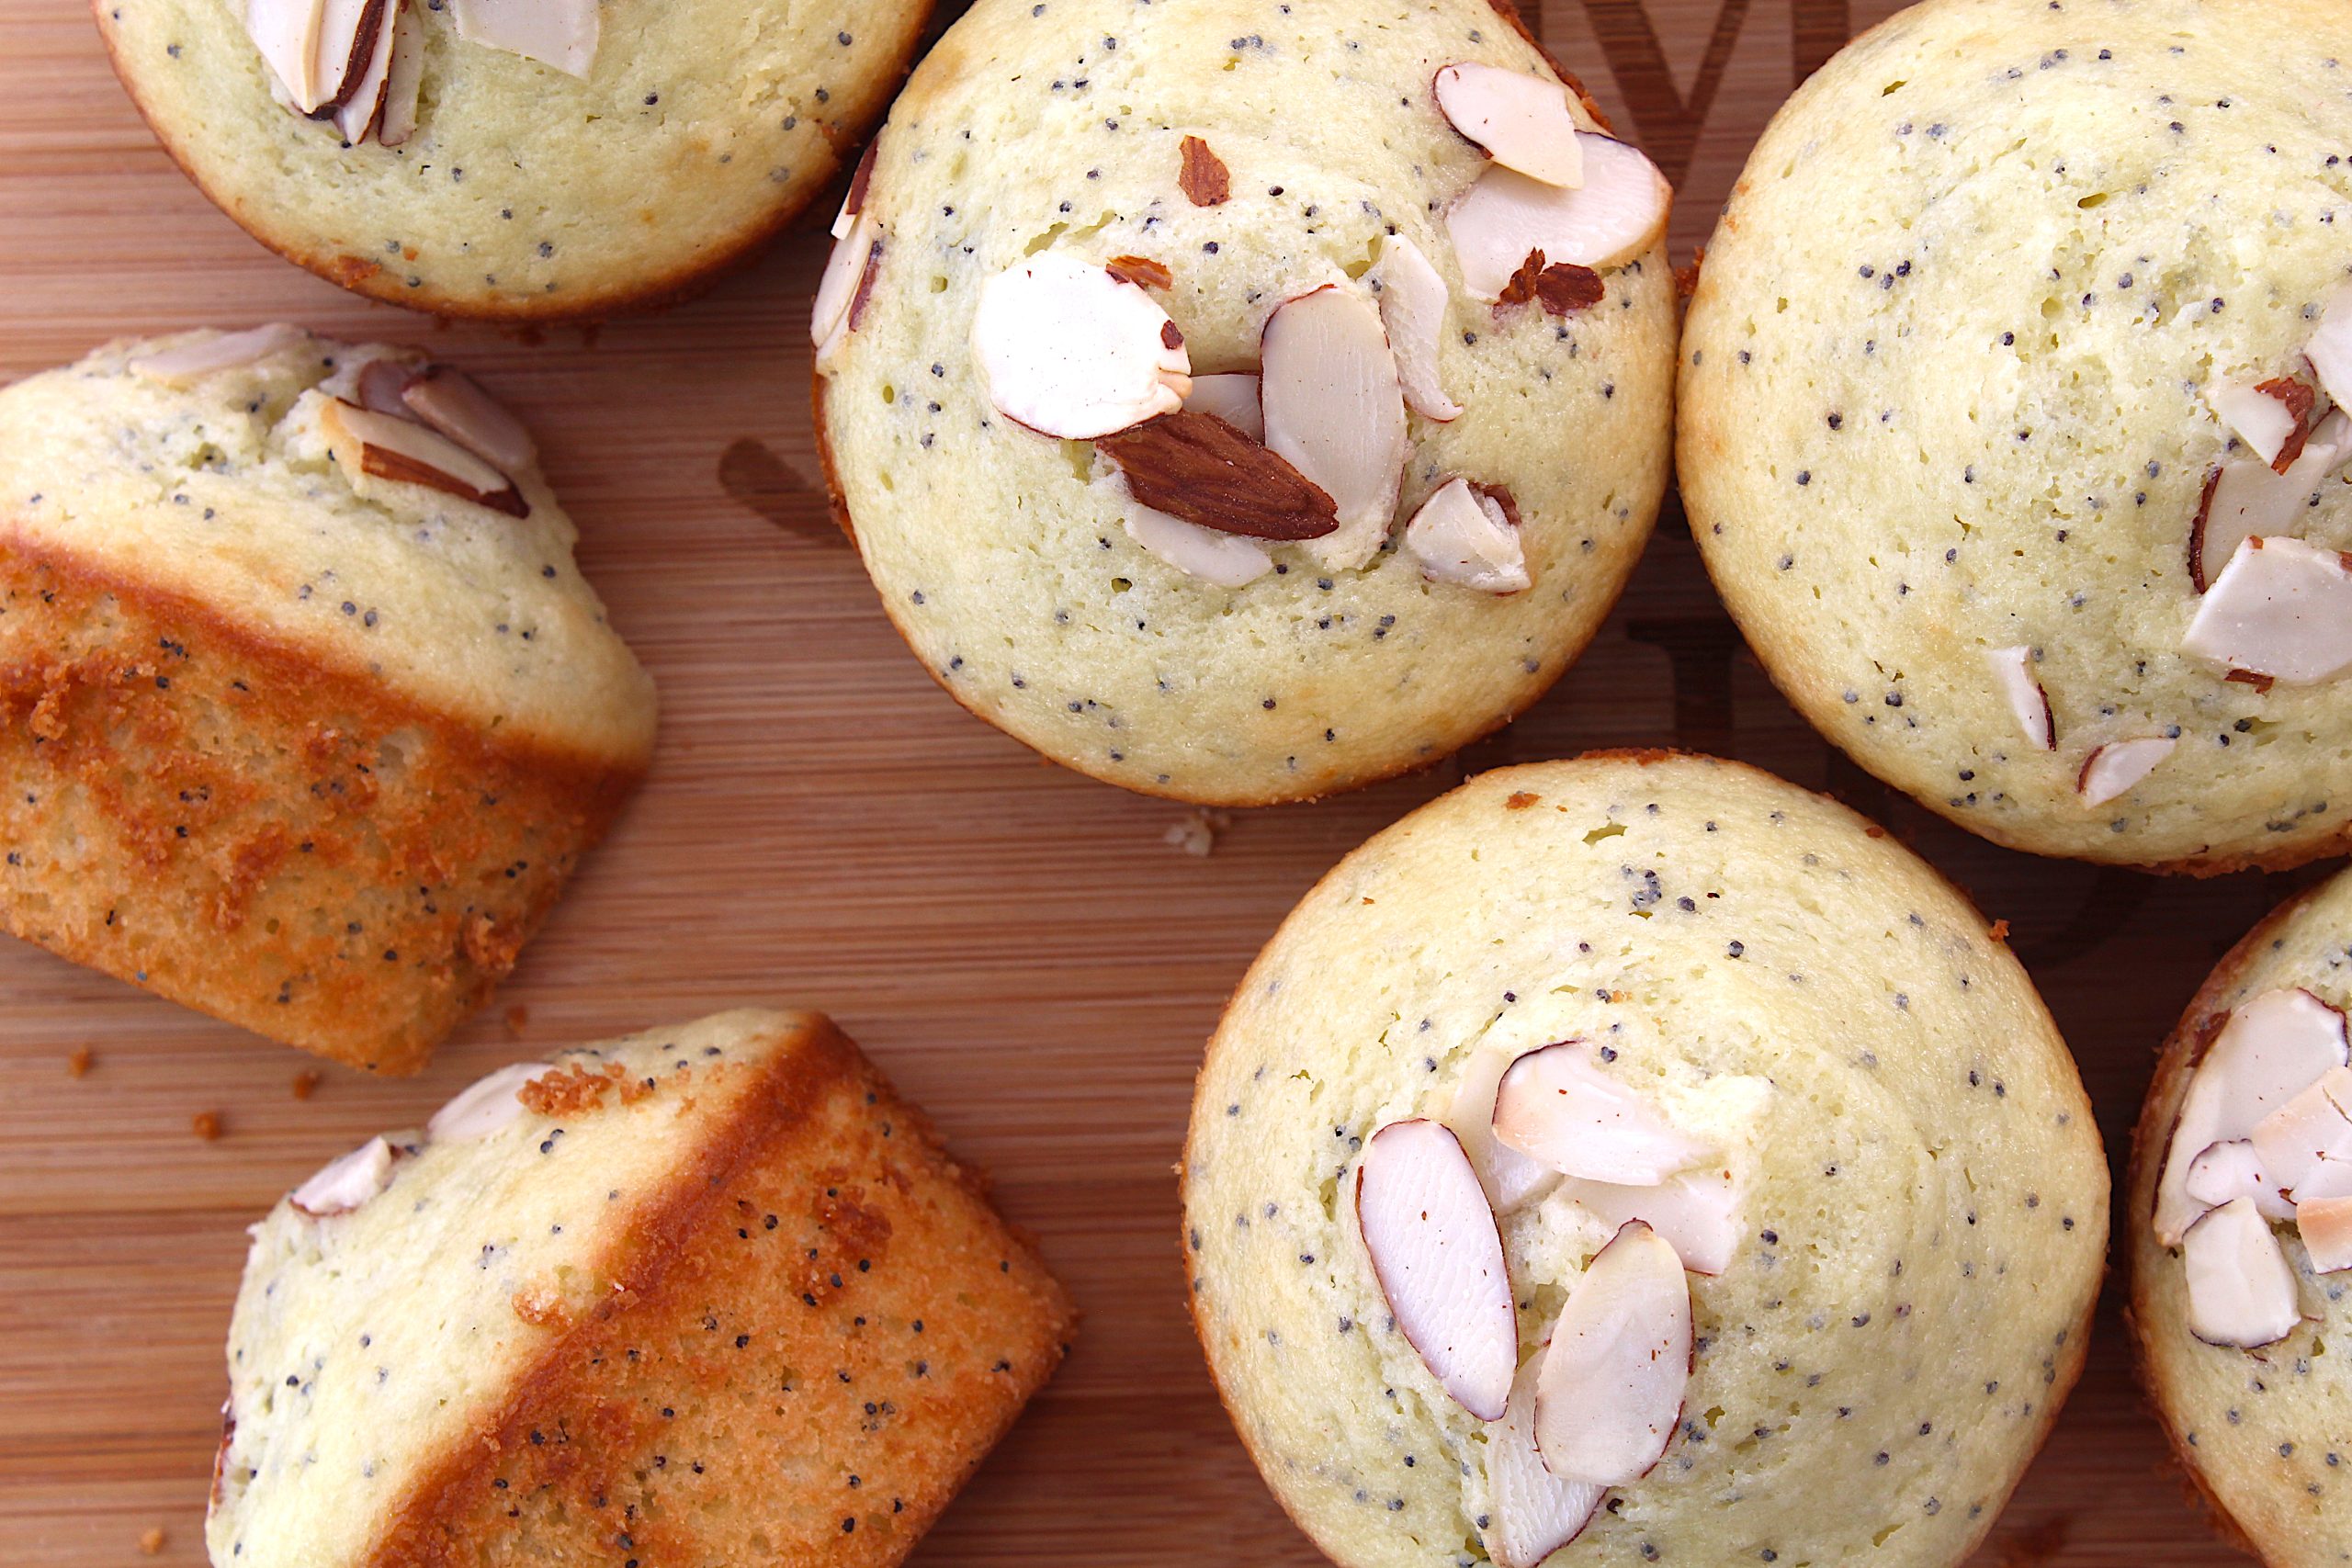 Almond Poppy Seed Muffins